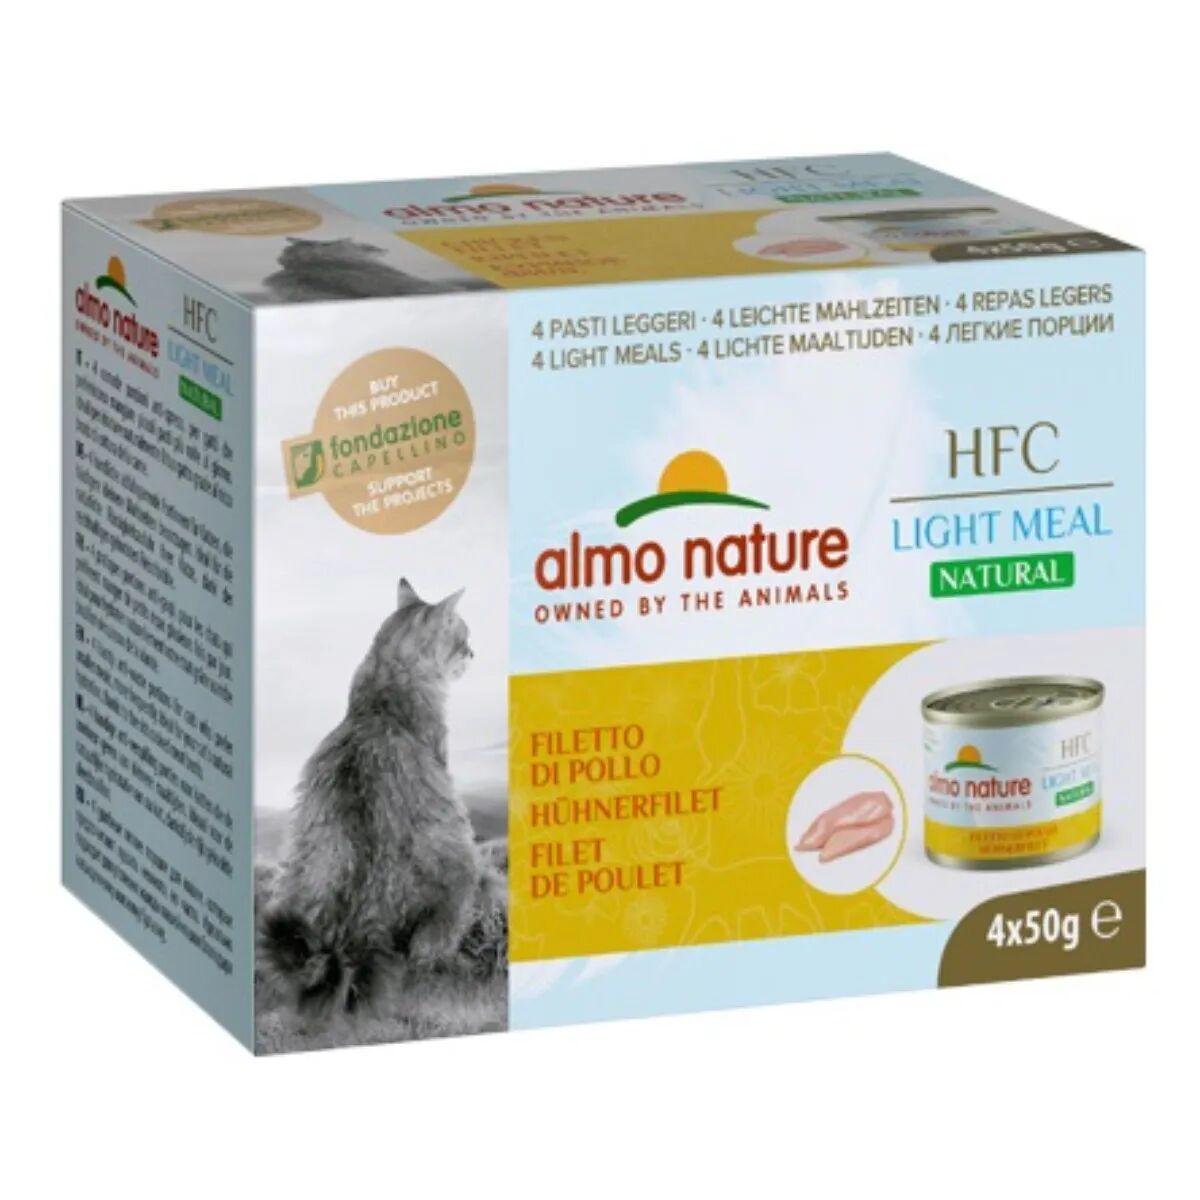 ALMO NATURE HFC Light Meal Natural Cat Lattina Multipack 4x50G FILETTO DI POLLO